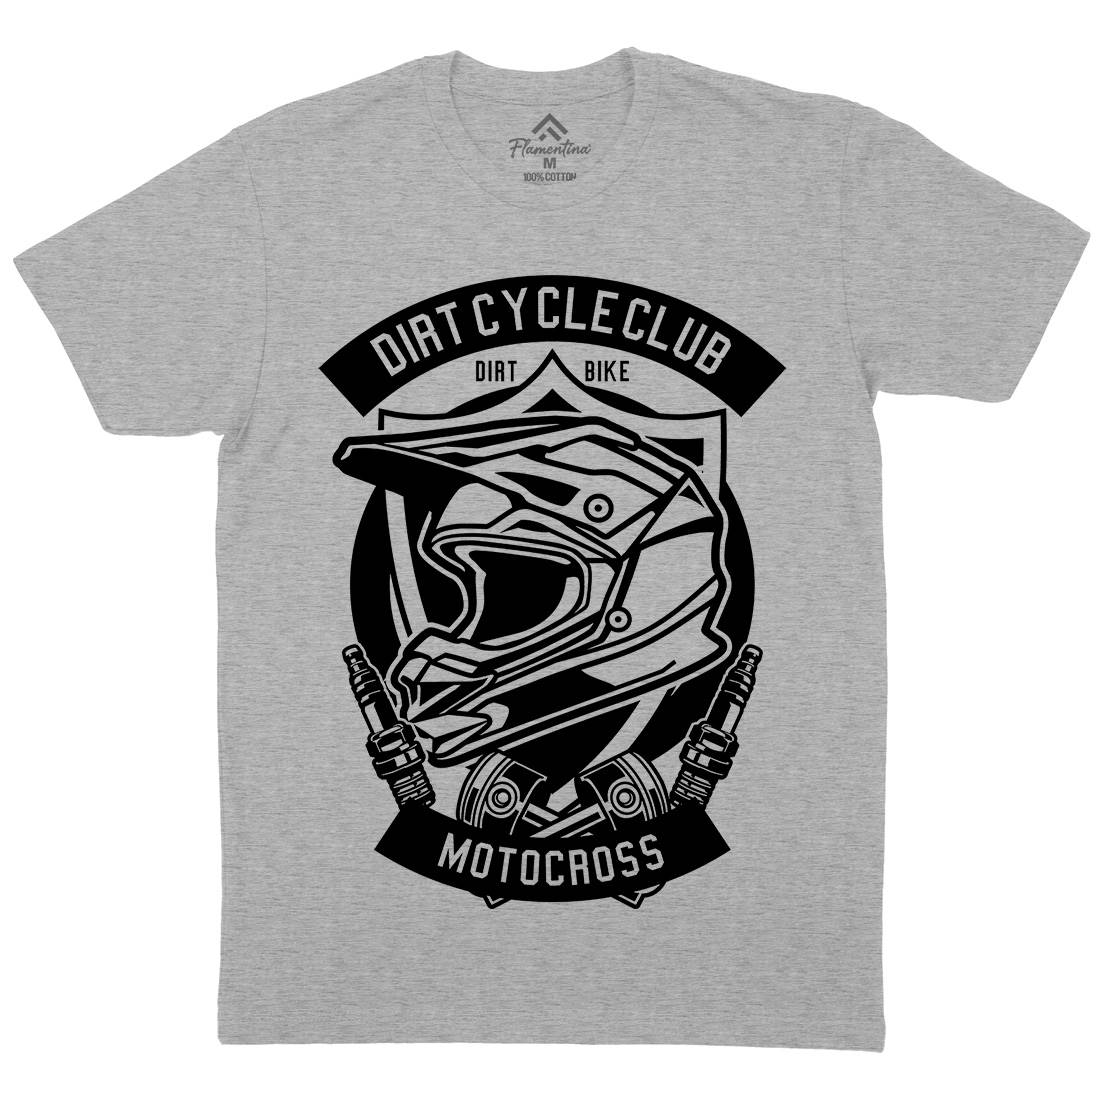 Dirty Cycle Club Mens Crew Neck T-Shirt Motorcycles B532